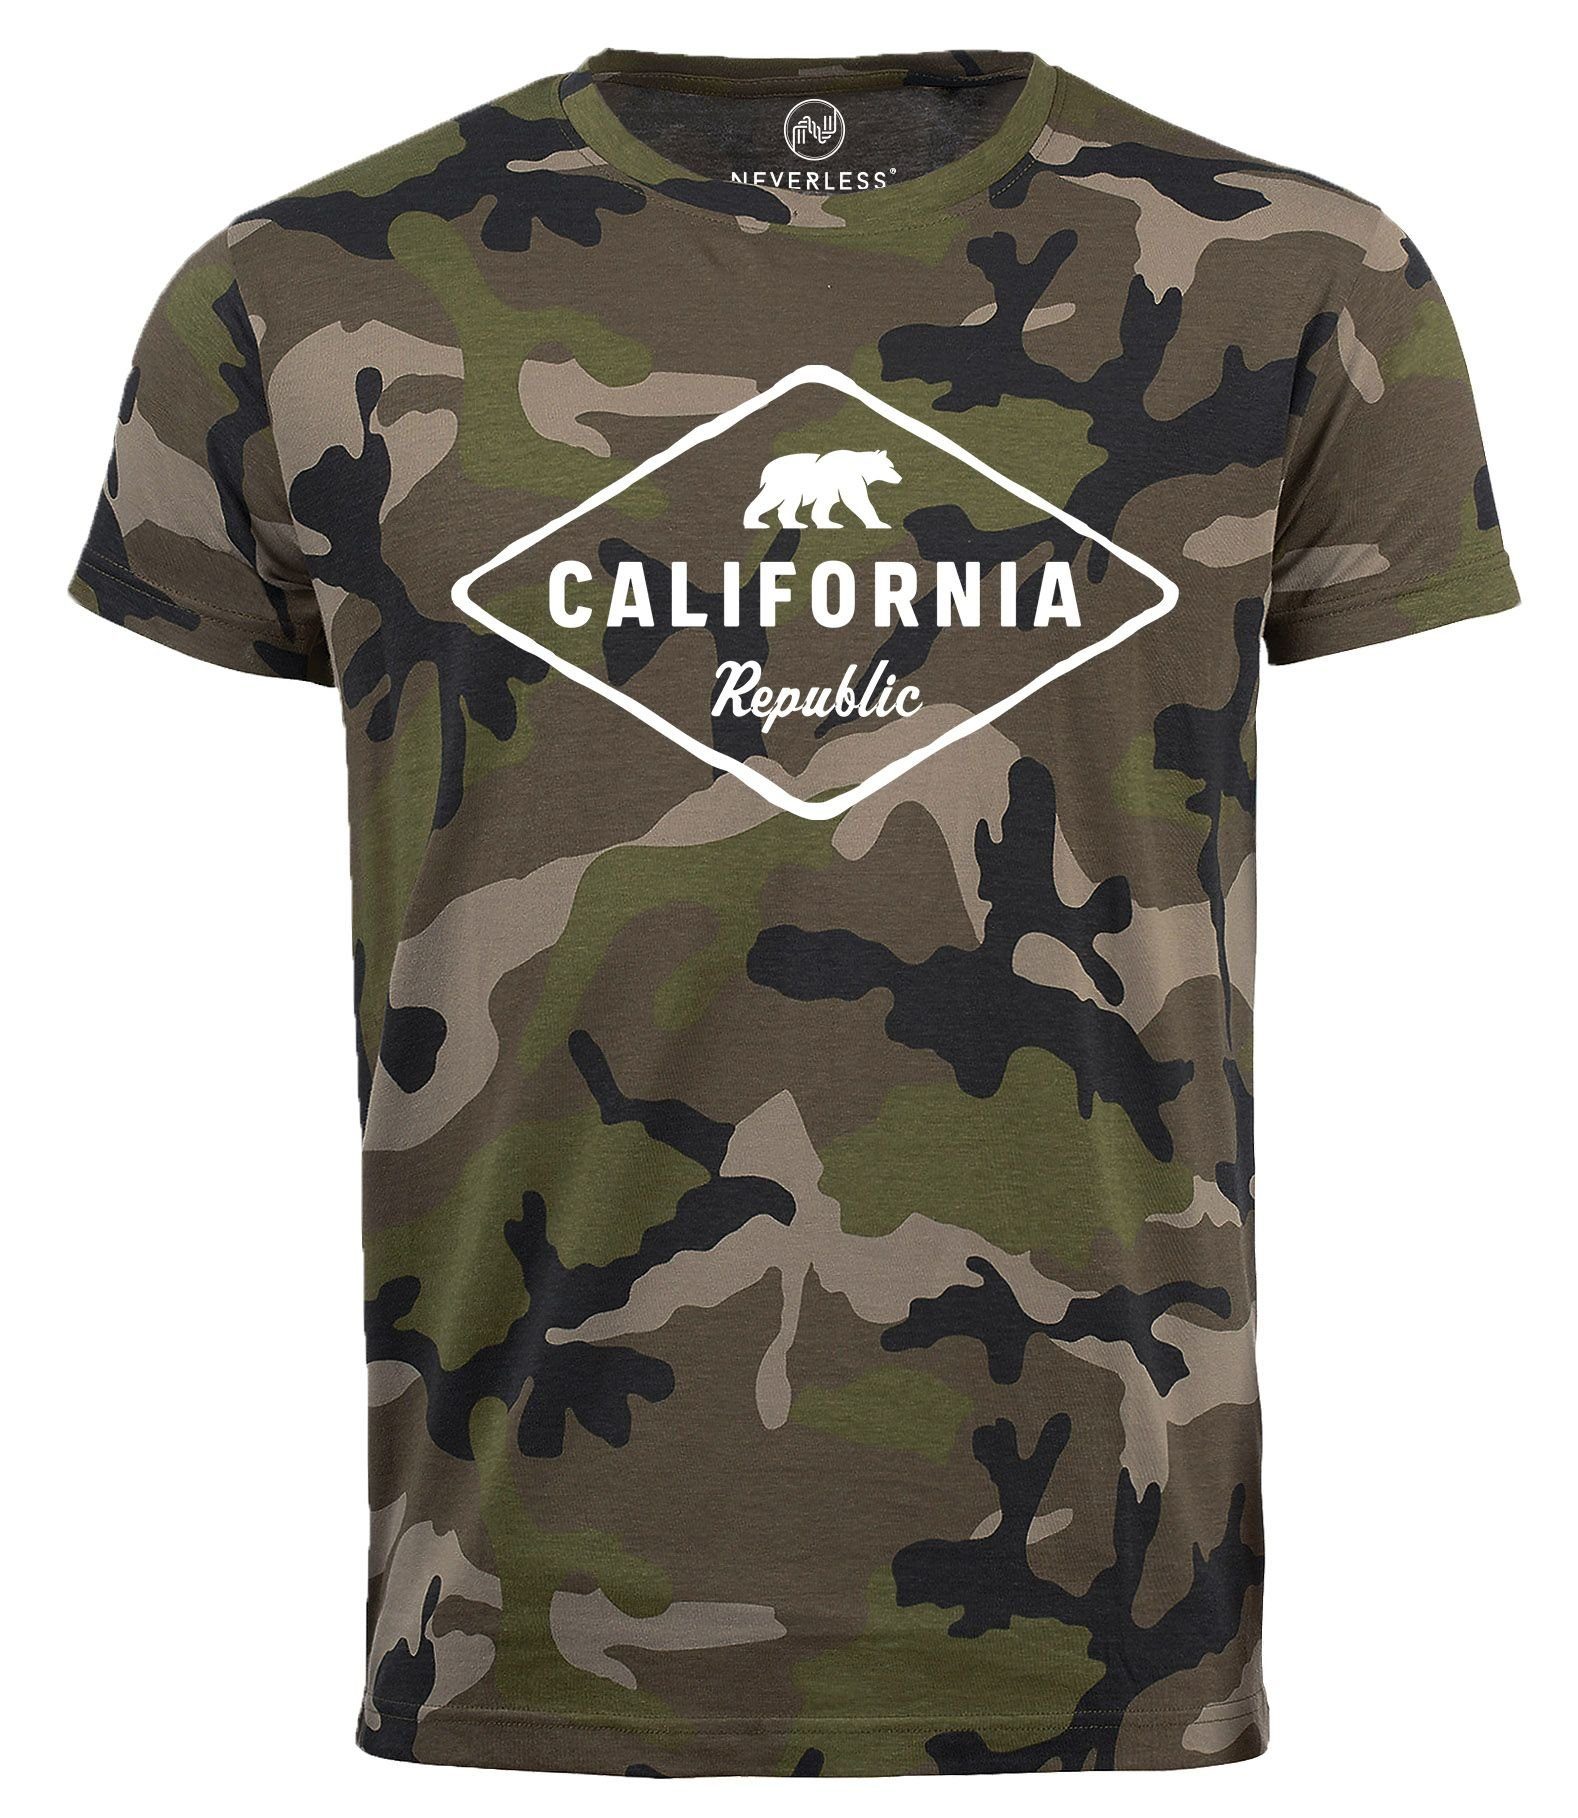 Print Badge Herren State USA Bär Camo-Shirt Bear California Neverless Republic Camouflage Sunshine mit T-Shirt Tarnmuster Print-Shirt Neverless®